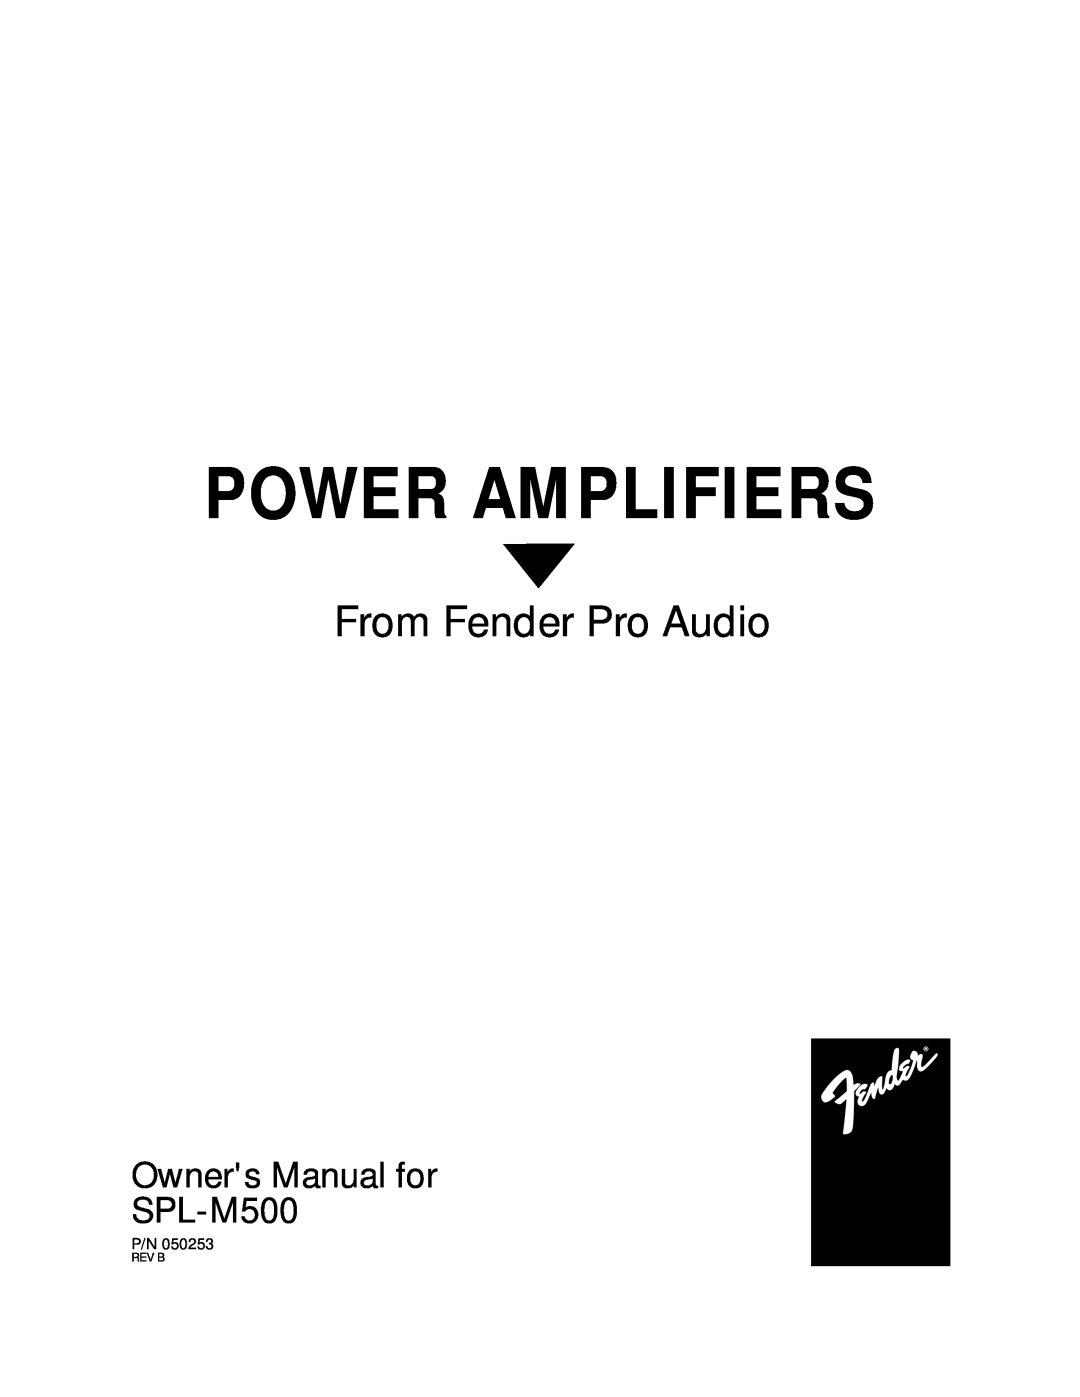 Fender SPL-M500 owner manual Power Amplifiers, From Fender Pro Audio, Rev B 